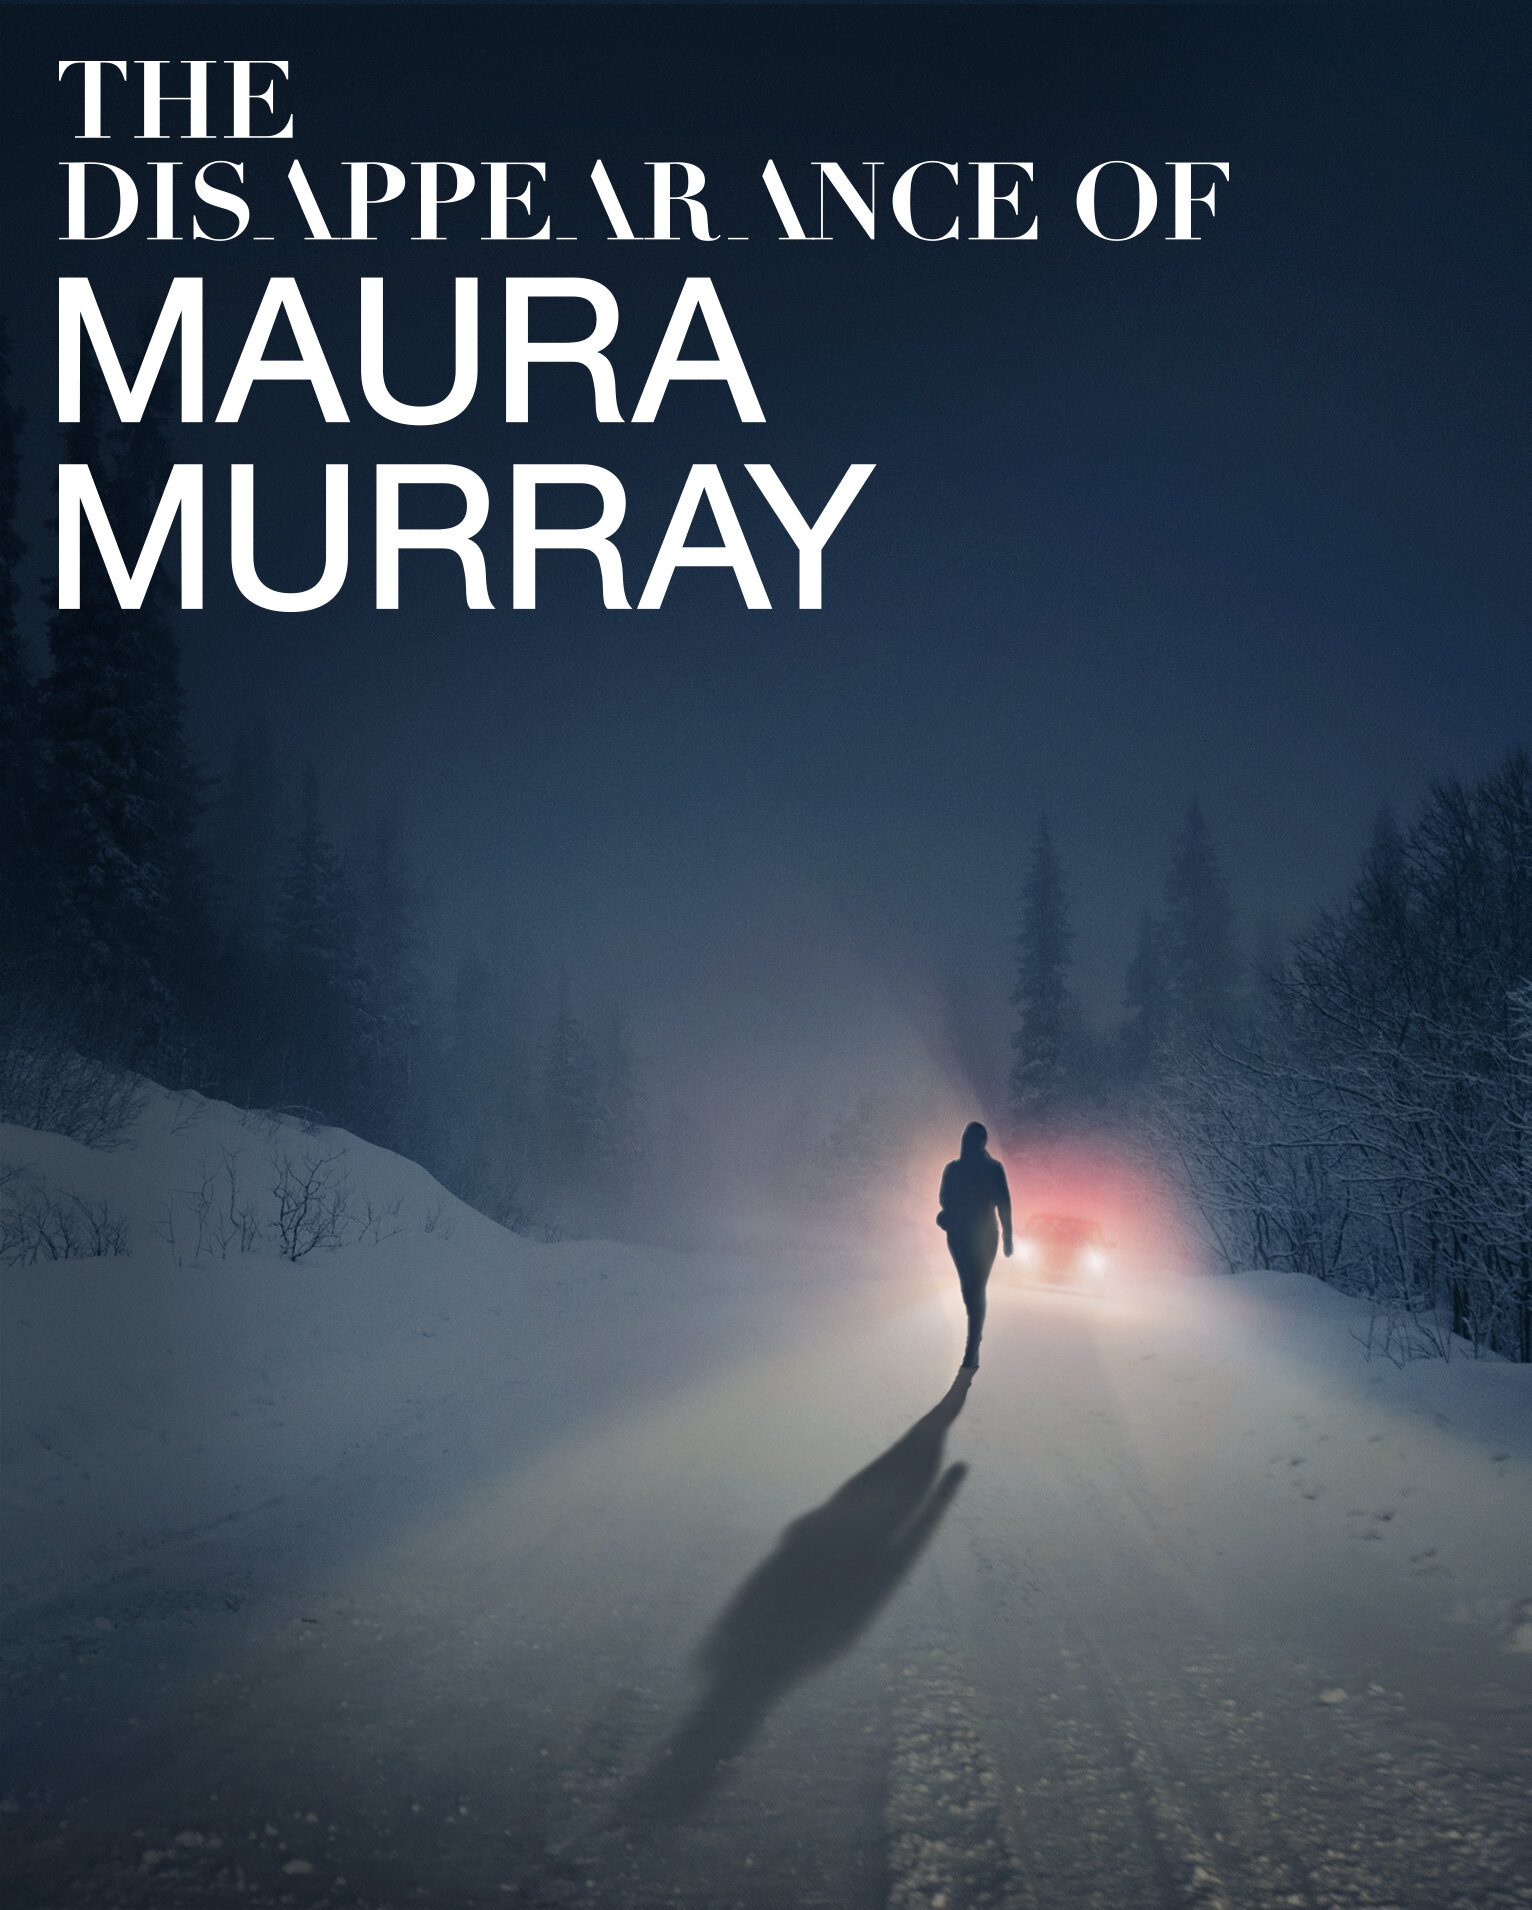 The Disappearance of Maura Murray ne zaman